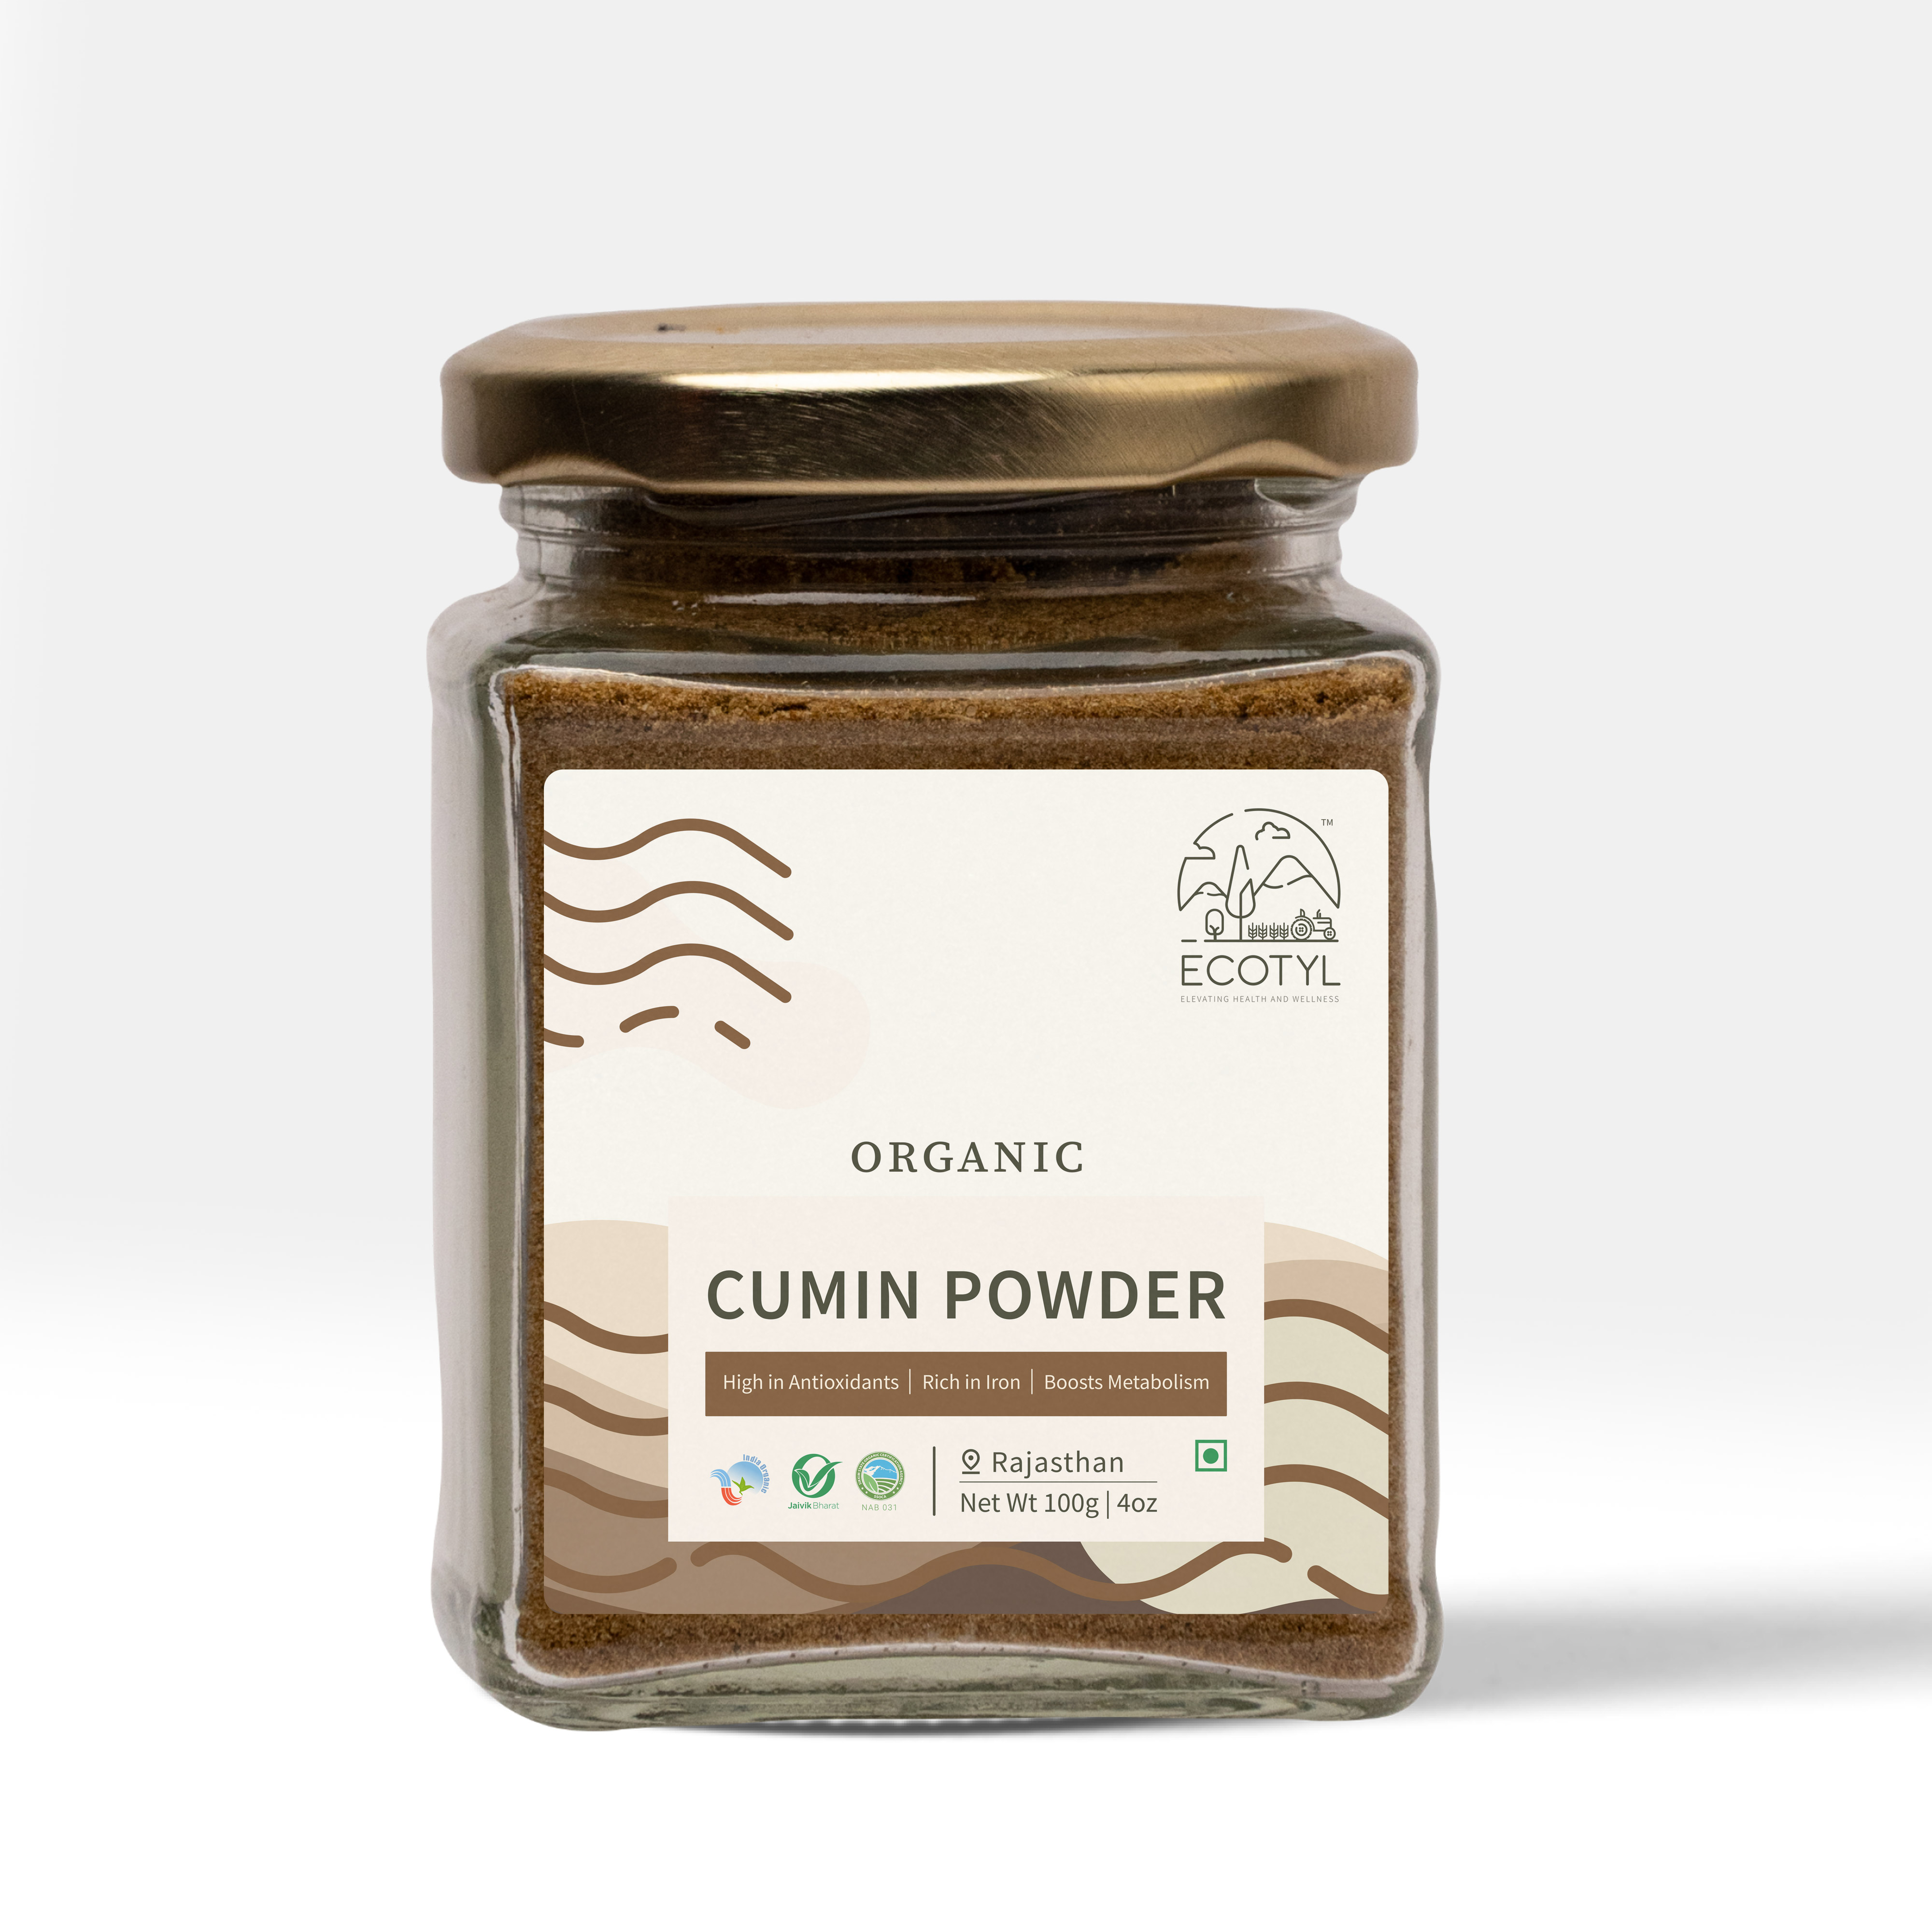 Buy Ecotyl Organic Cumin Powder - 100 g at Best Price Online